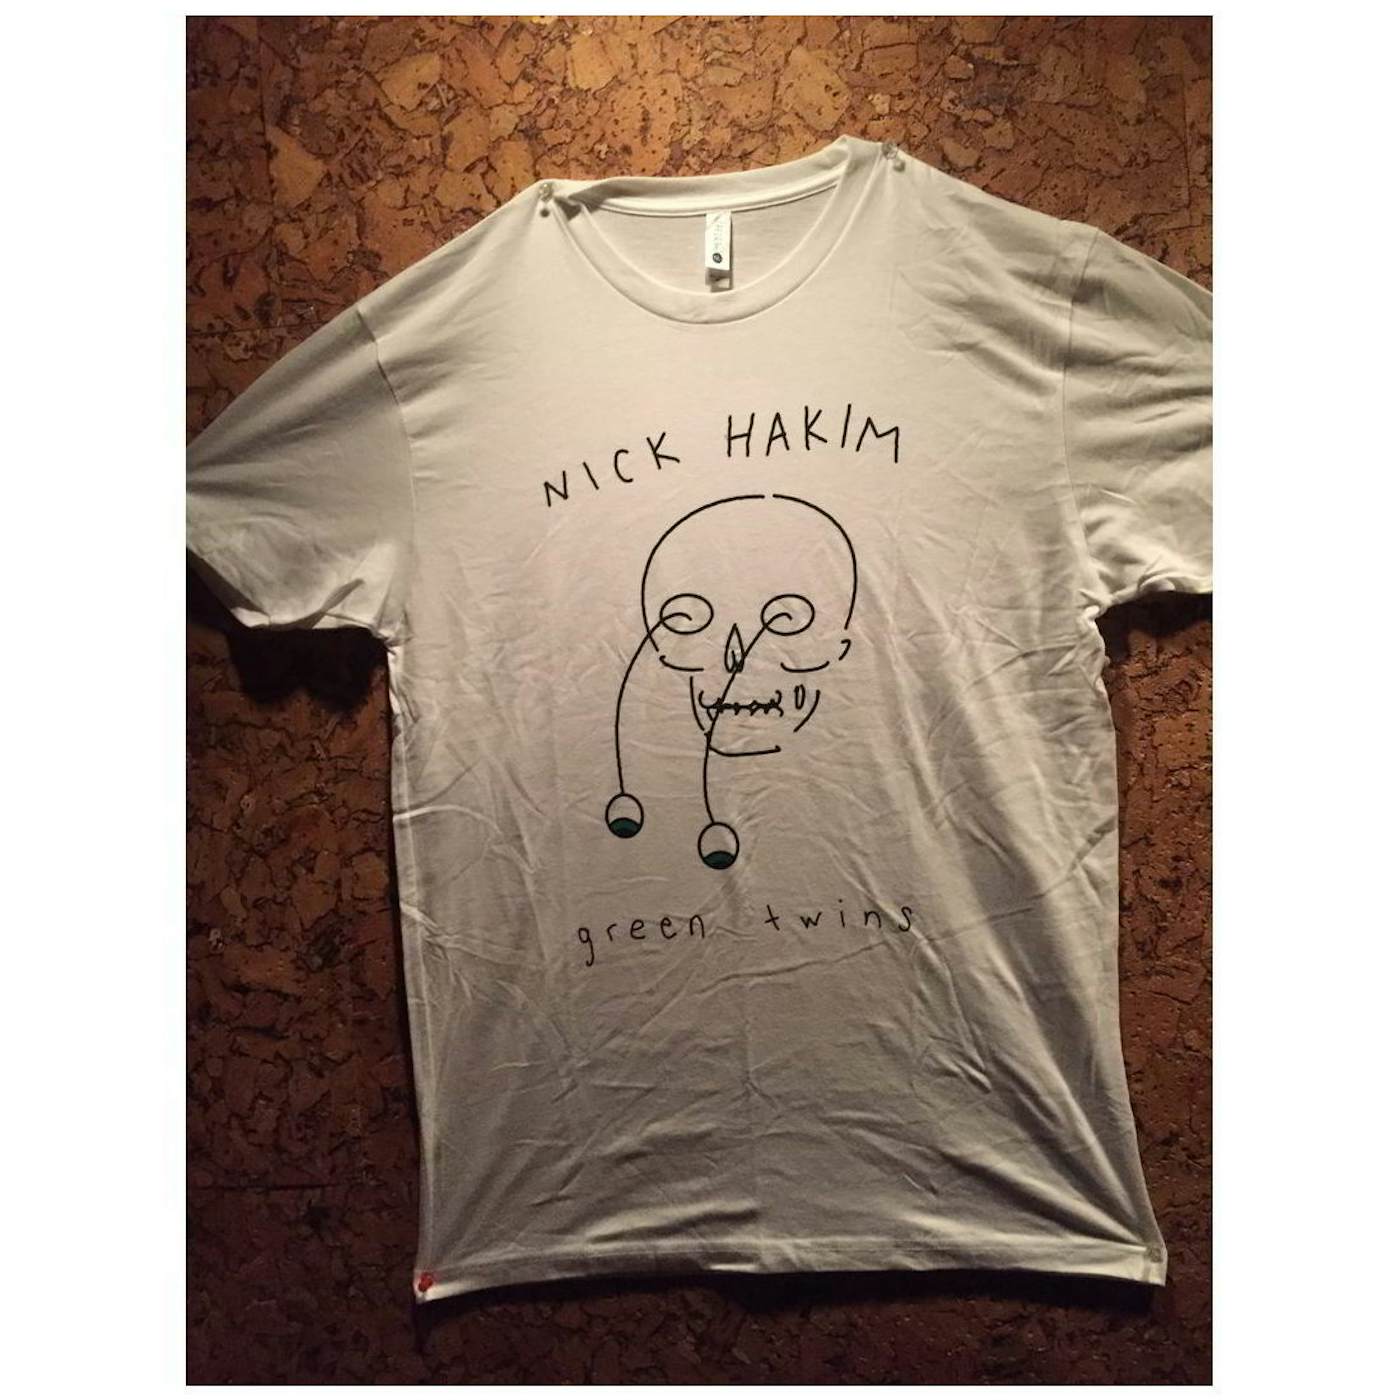 Nick Hakim - Green Twins T-Shirt